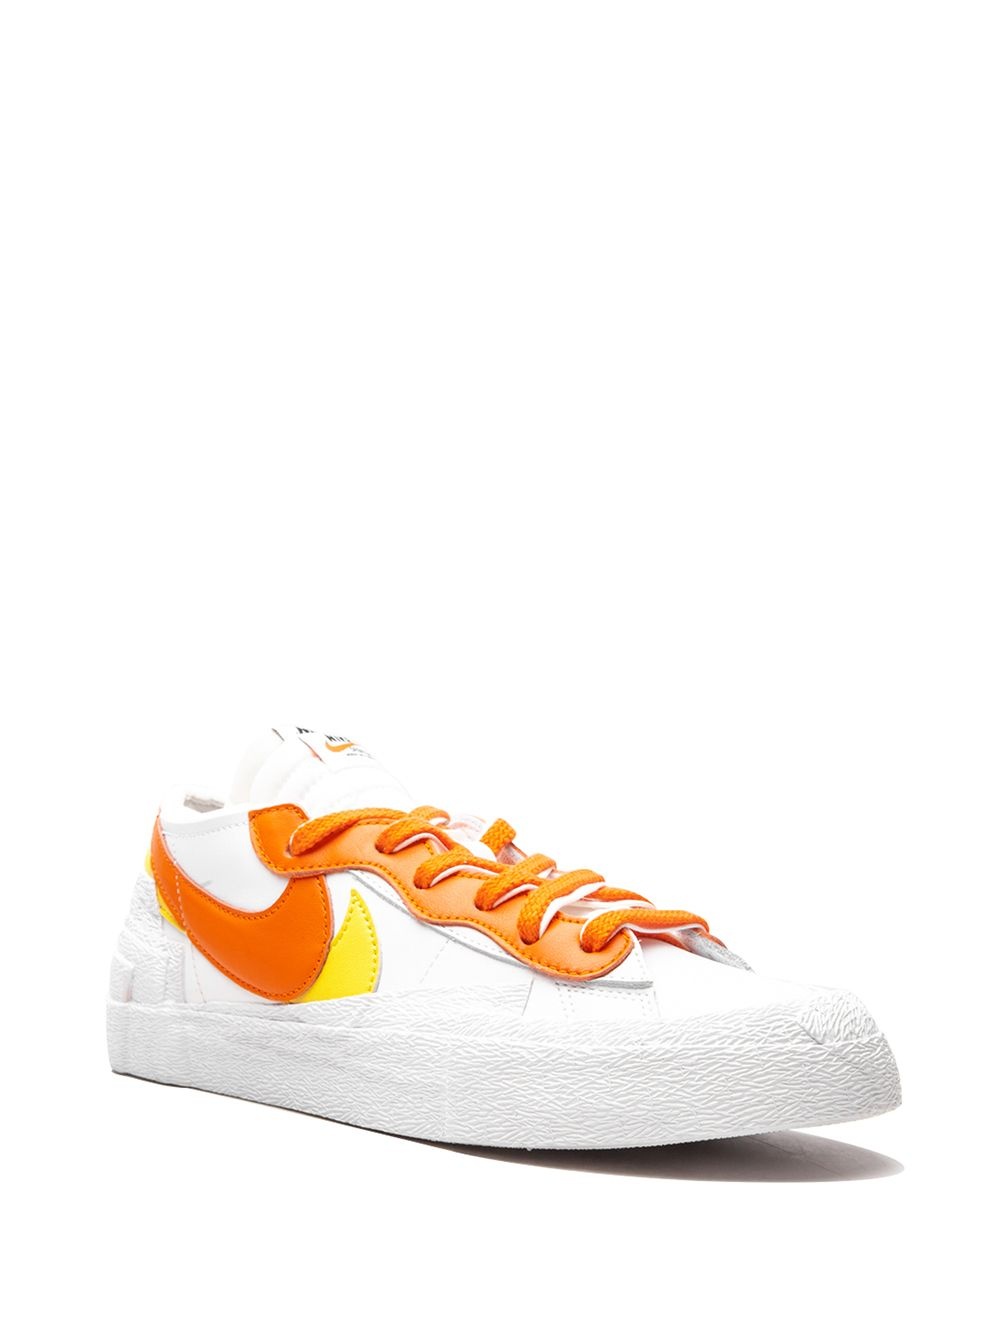 x sacai Blazer Low "Magma Orange" sneakers - 2